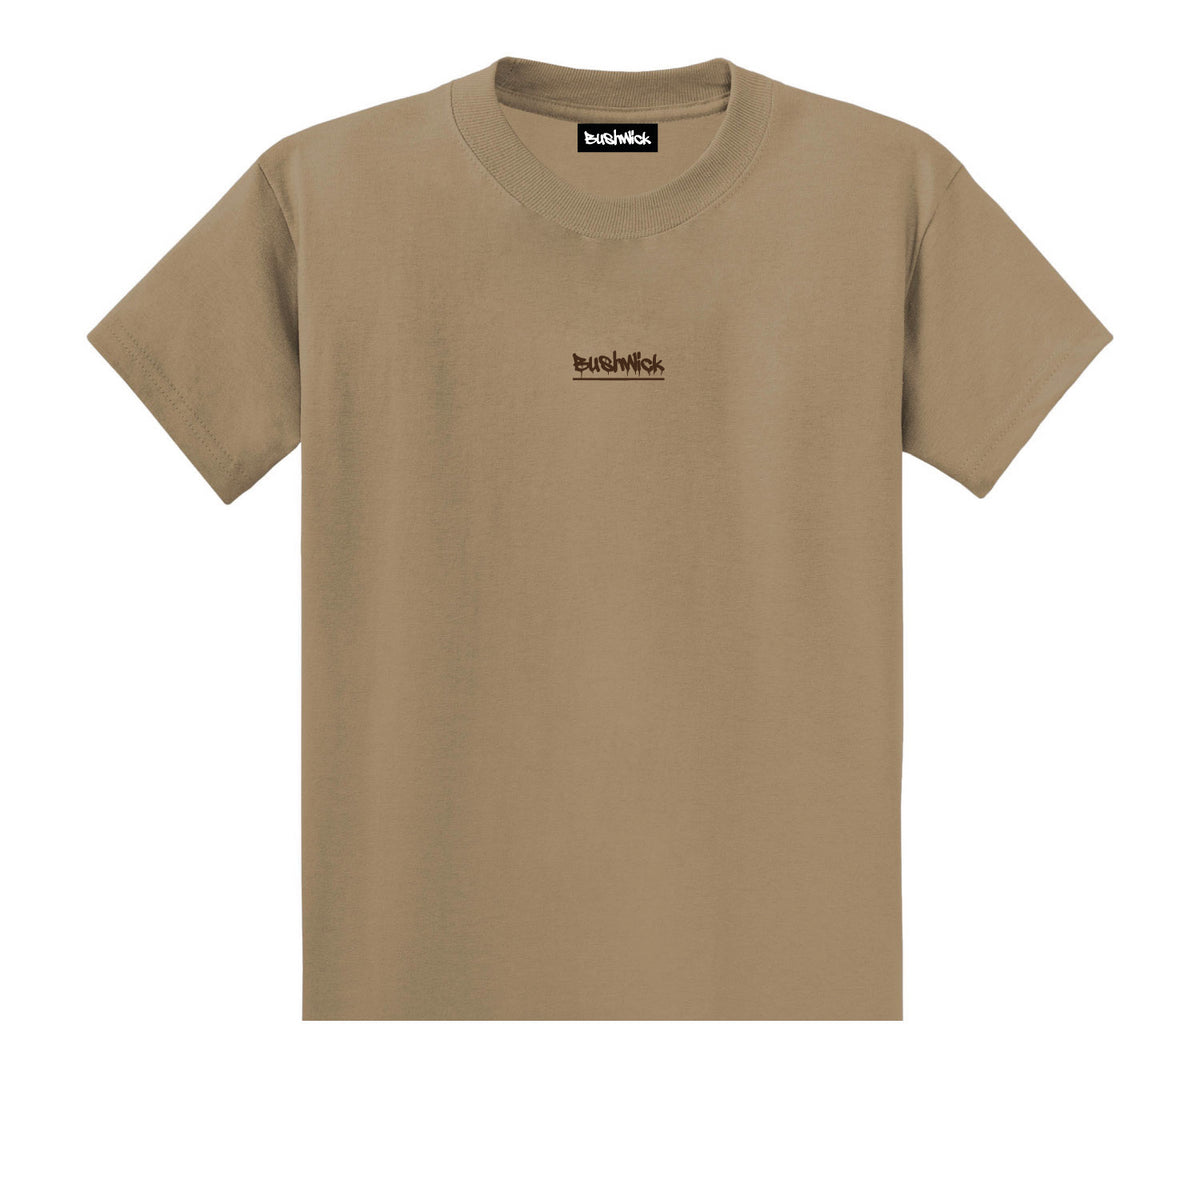 Bushwick T-Shirt uomo Essential cammello